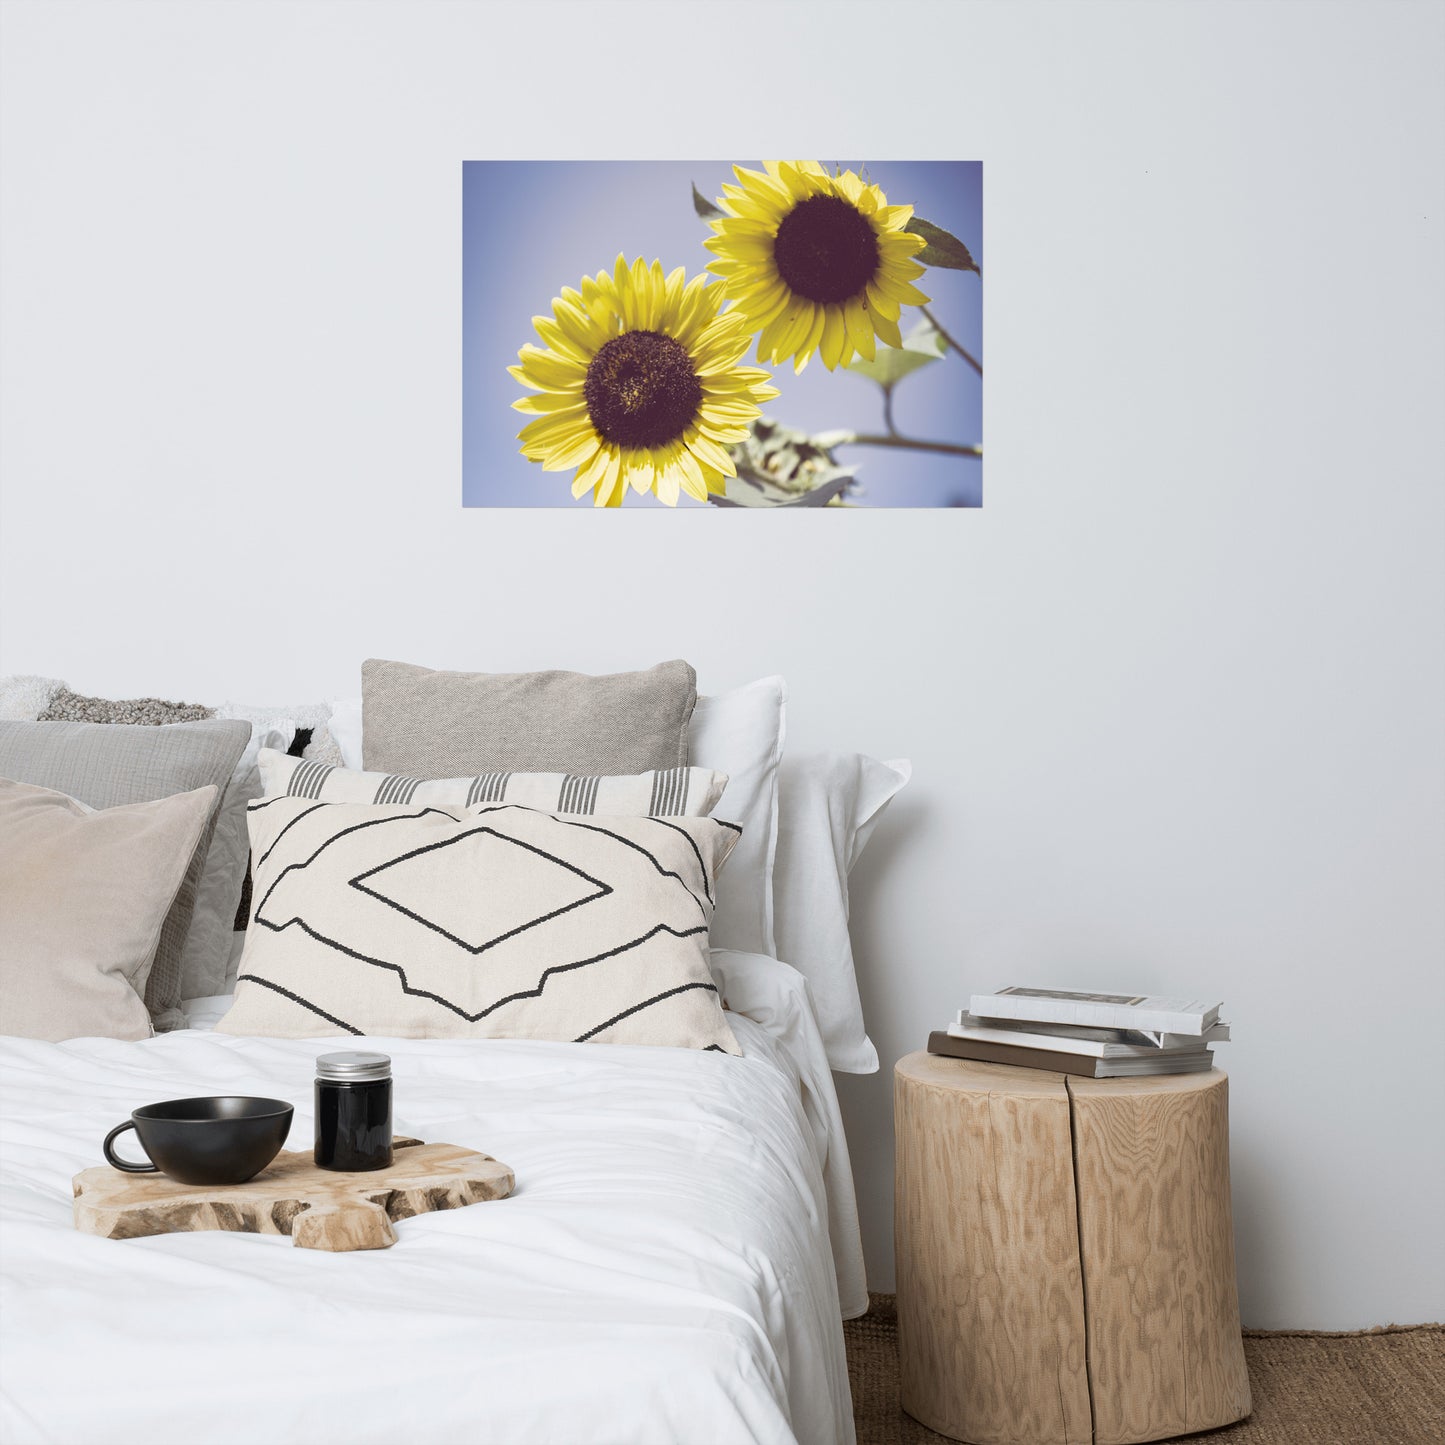 Minimalist Flower Wall Art: Aged Sunflowers Against Sky - Botanical / Floral / Flora / Flowers / Nature Photograph Loose / Unframed / Frameable / Frameless Wall Art Print - Artwork